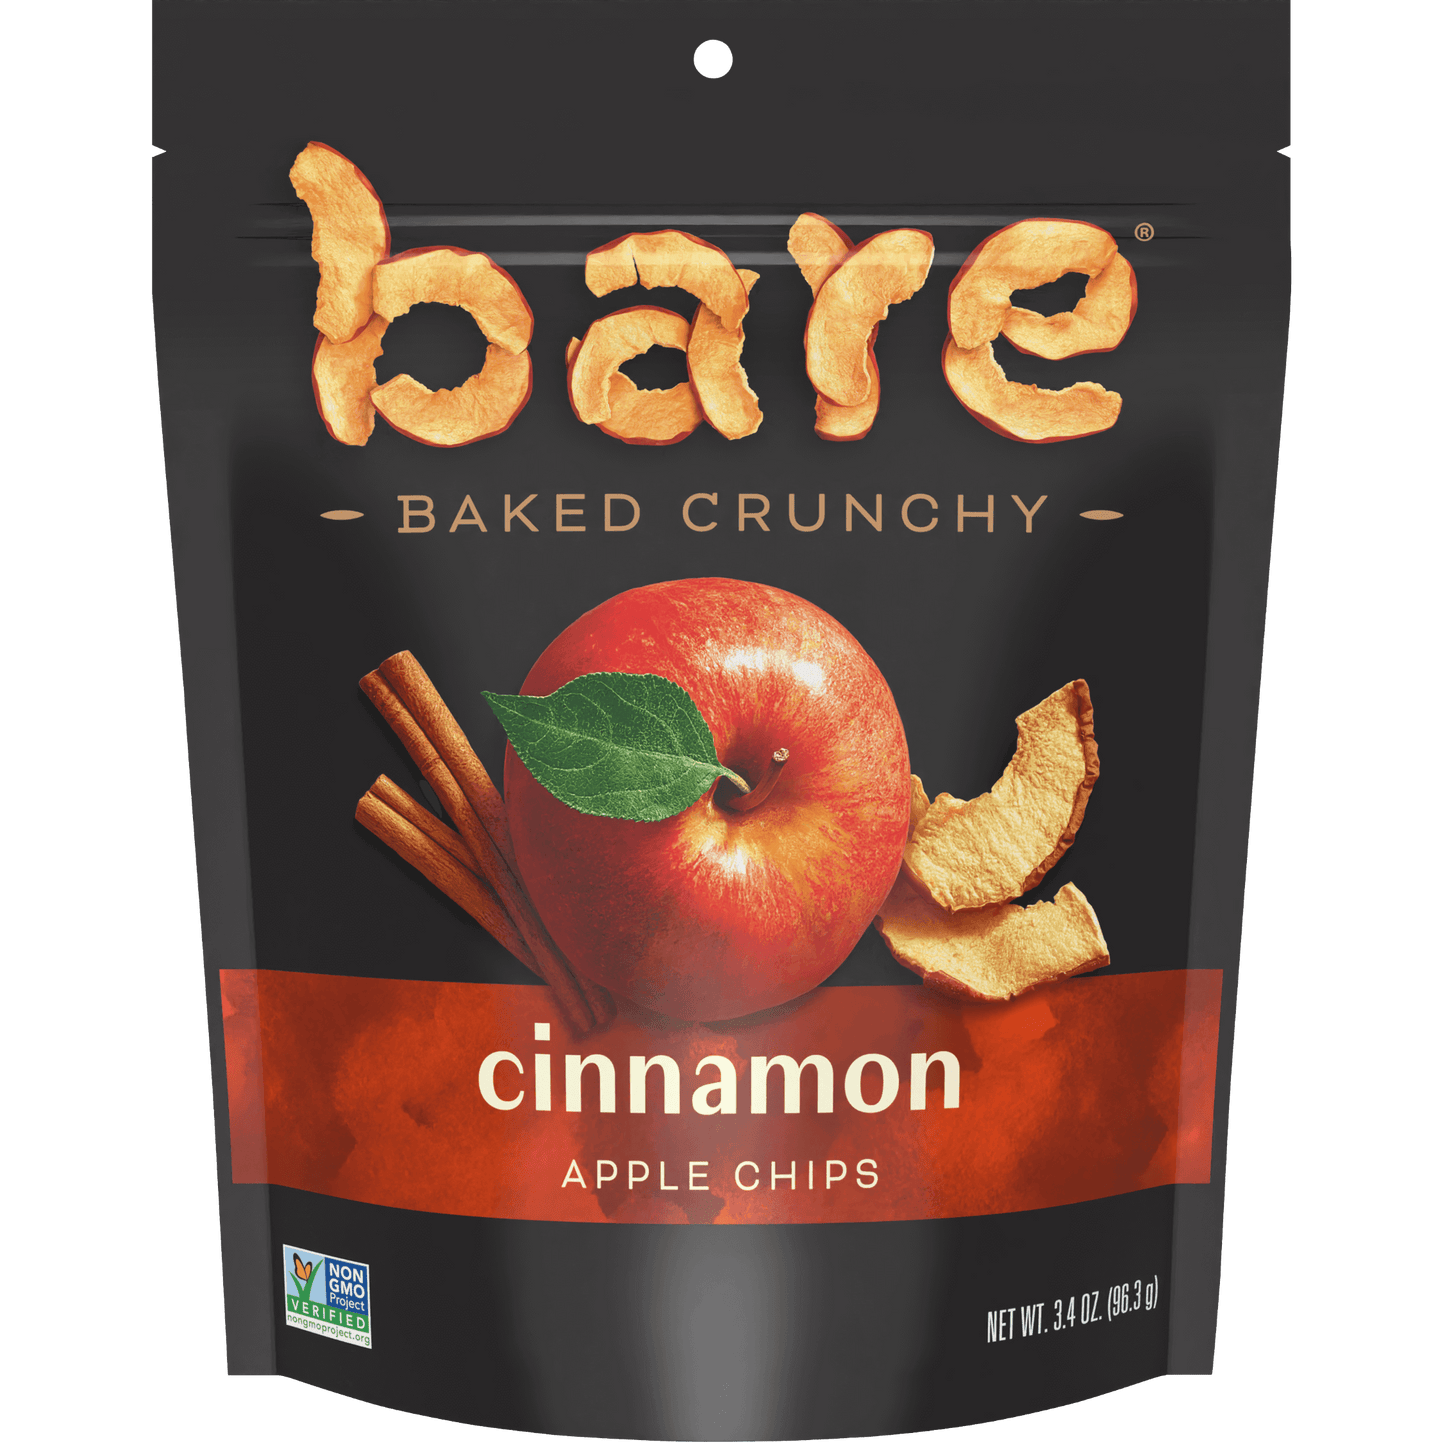 Bare Baked Fruit Chips - East Side Grocery